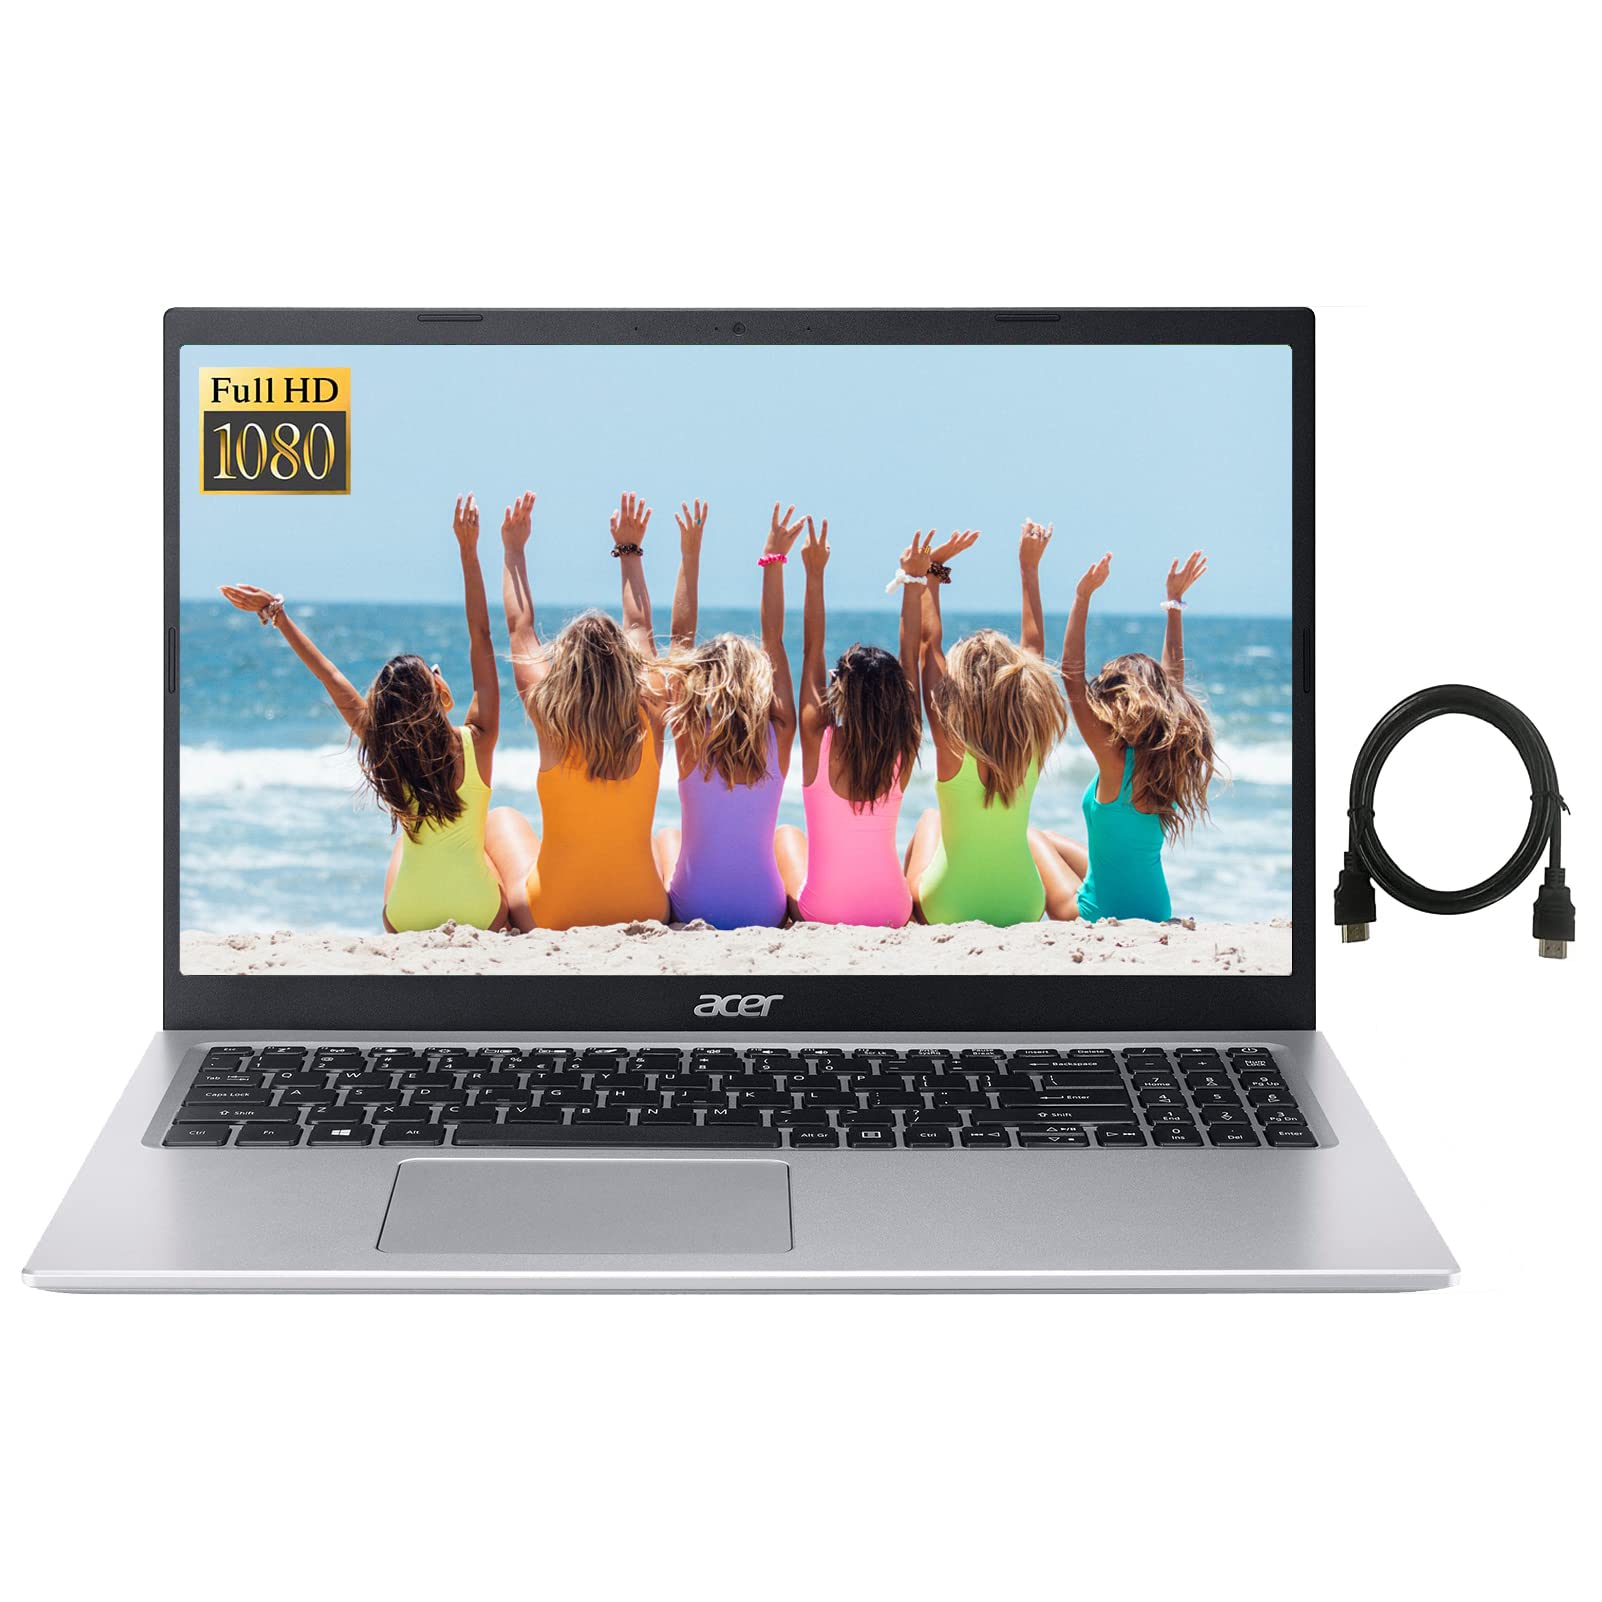 Acer Aspire 5 Slim Laptop | 15.6" Full HD IPS Display | 11th Gen Intel i3-1115G4 Processor (Beat i5-1030G7) | Intel UHD Graphics | 8GB RAM | 256GB SSD | Windows 11 Home in S Mode | TWE HDMI Cable  - Very Good